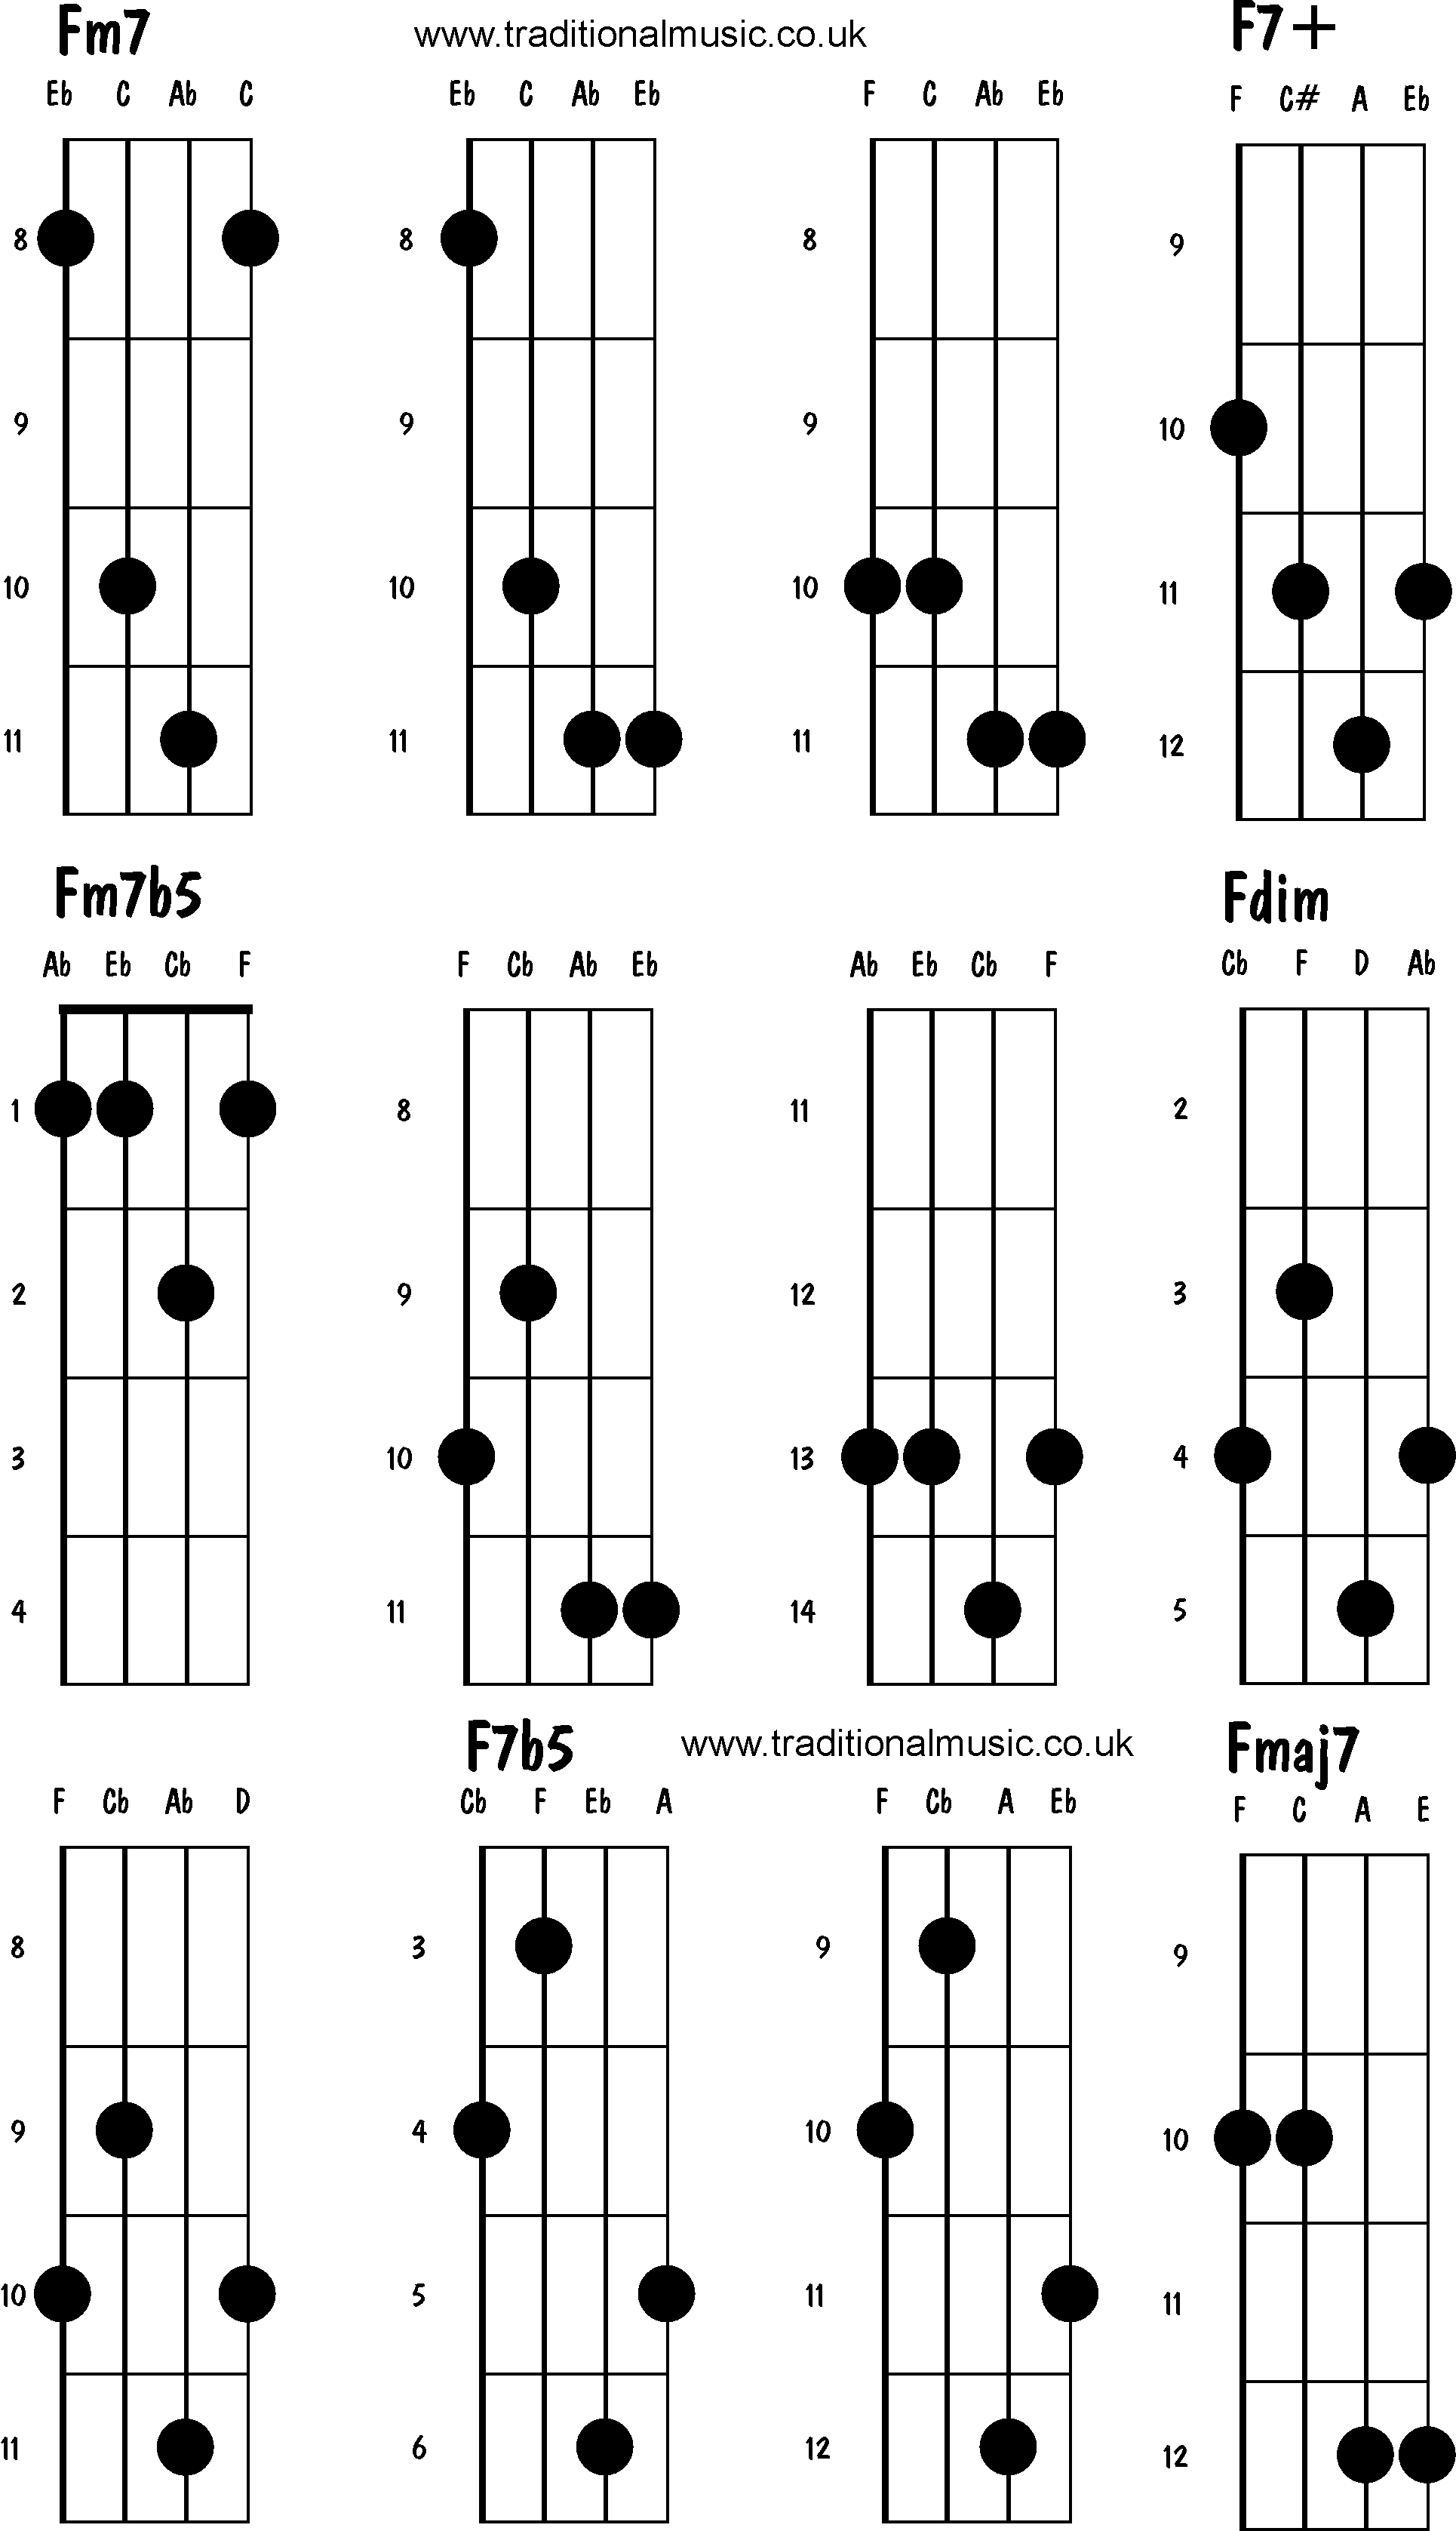 Advanced mandolin chords: Fm7, F7+, Fm7b5, Fdim, F7b5, Fmaj7